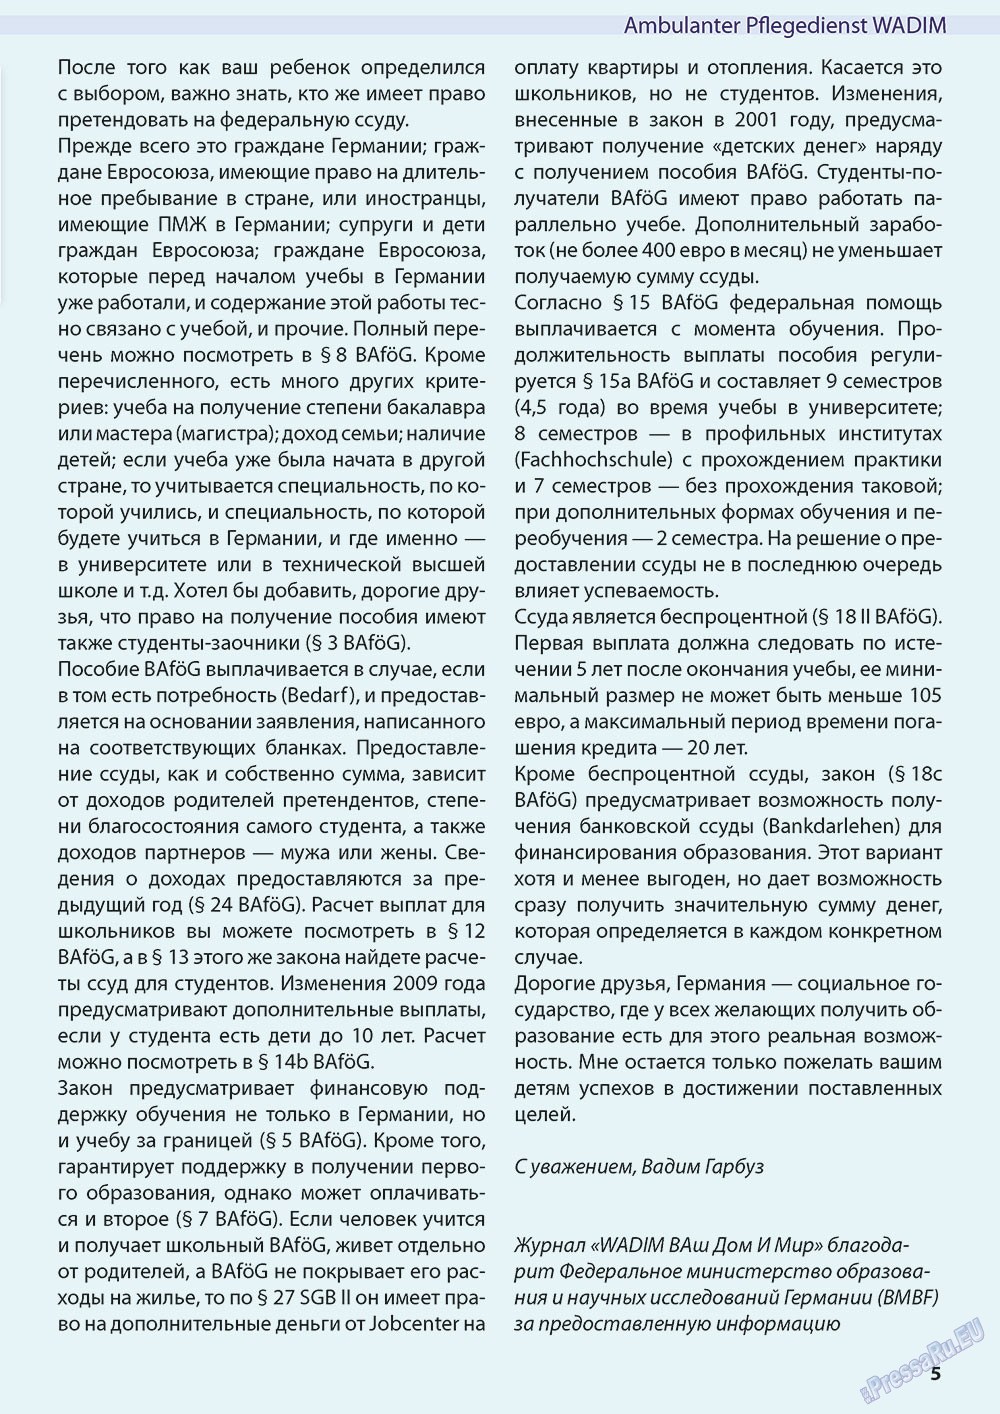 Wadim, журнал. 2012 №12 стр.5